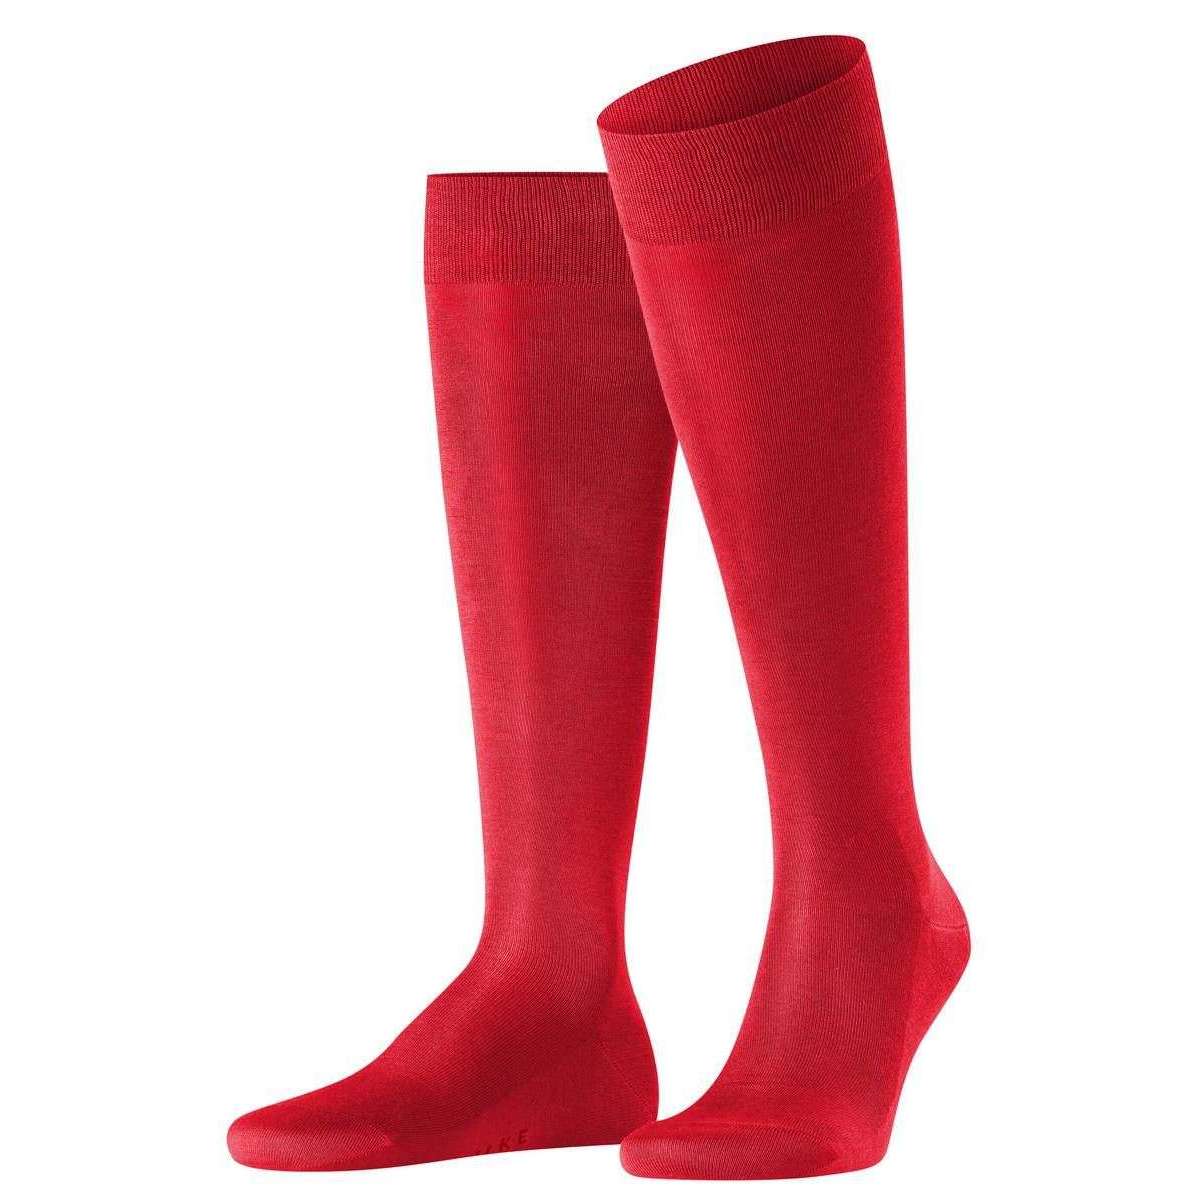 Falke Tiago Knee High Socks - Scarlet Red